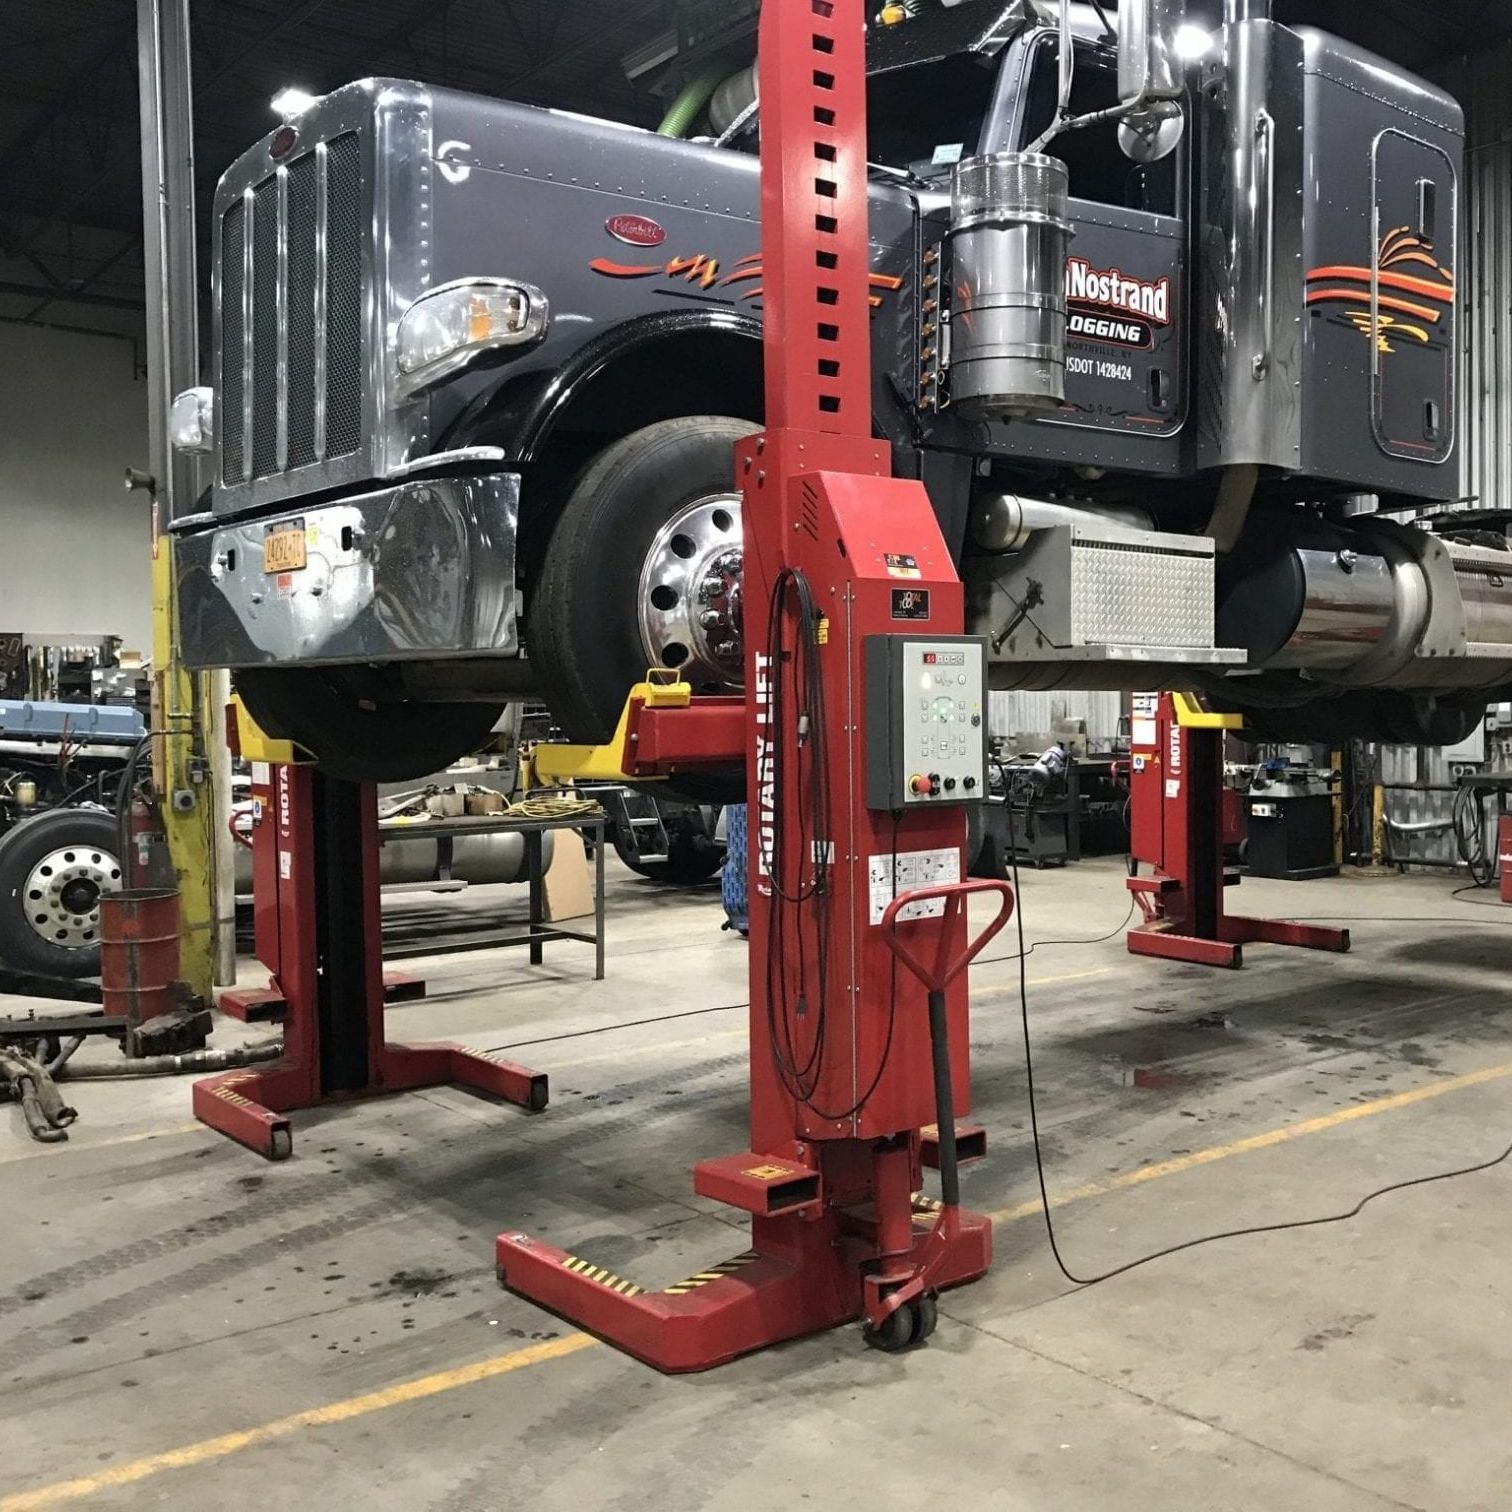 Gantts Truck and Trailer Repair Services Photo